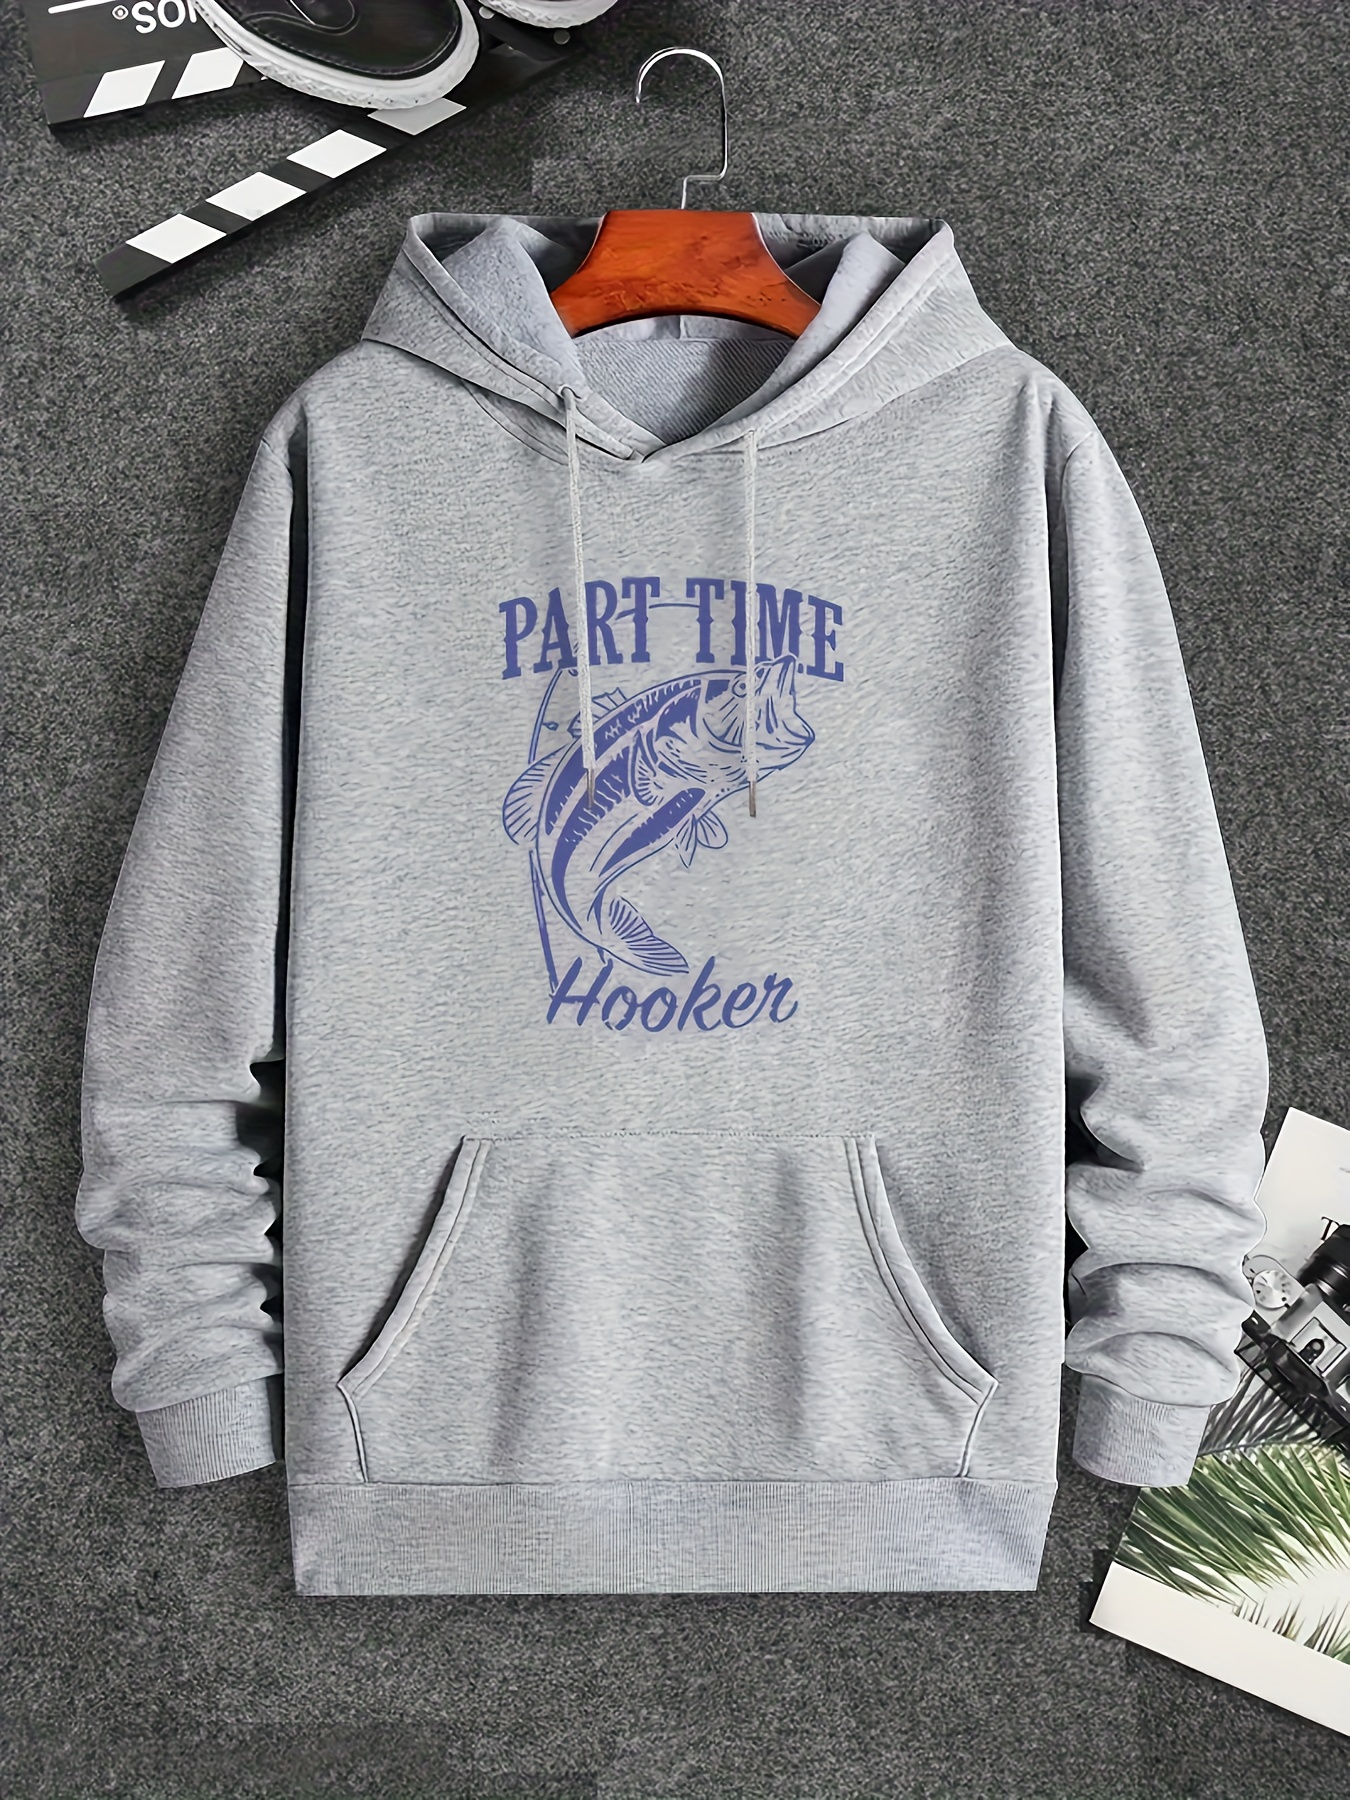 Fishing Hoodies & Sweatshirts, Unique Designs